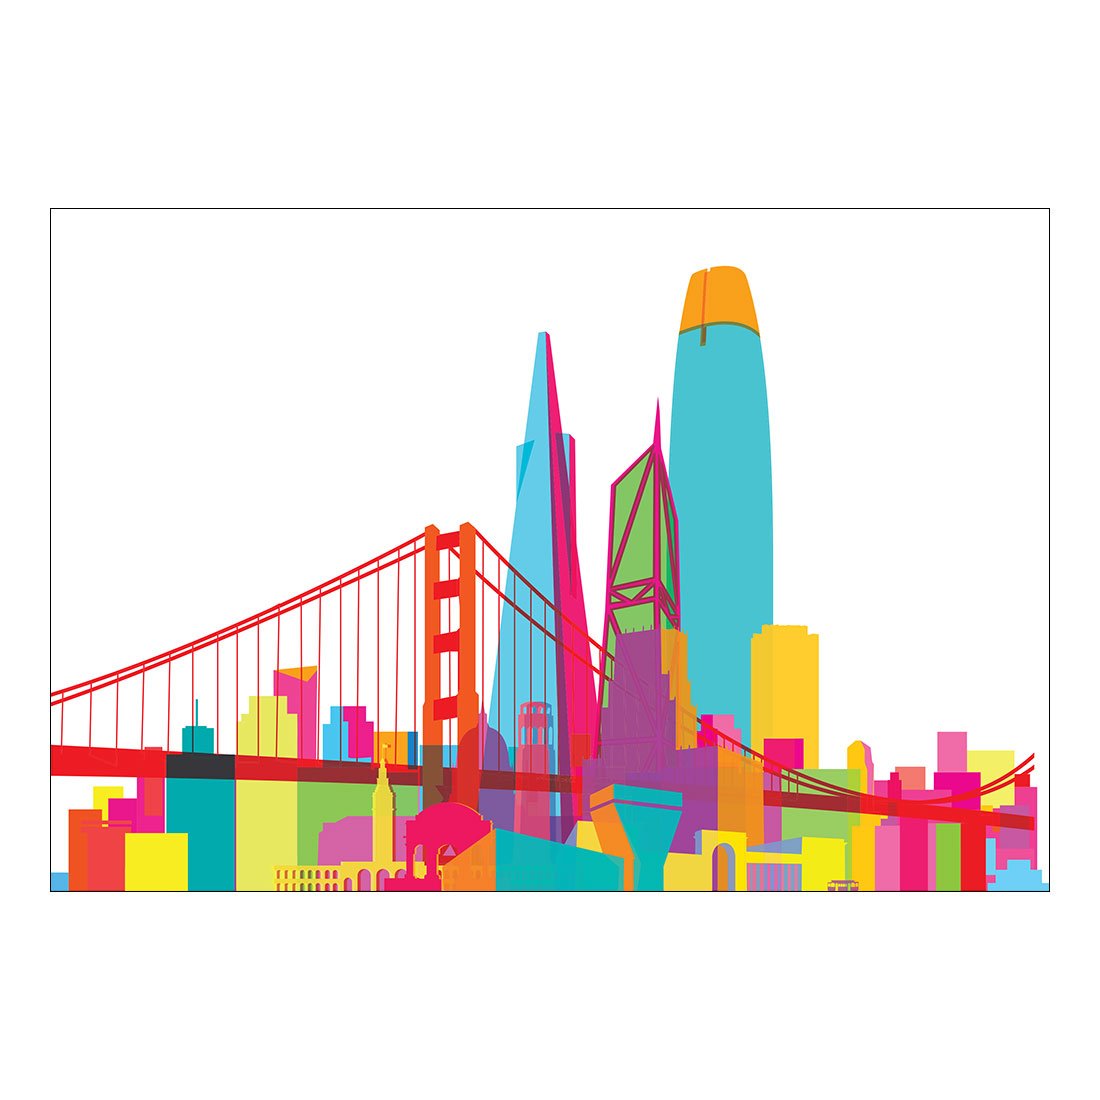 San Francisco Skyline Postcard